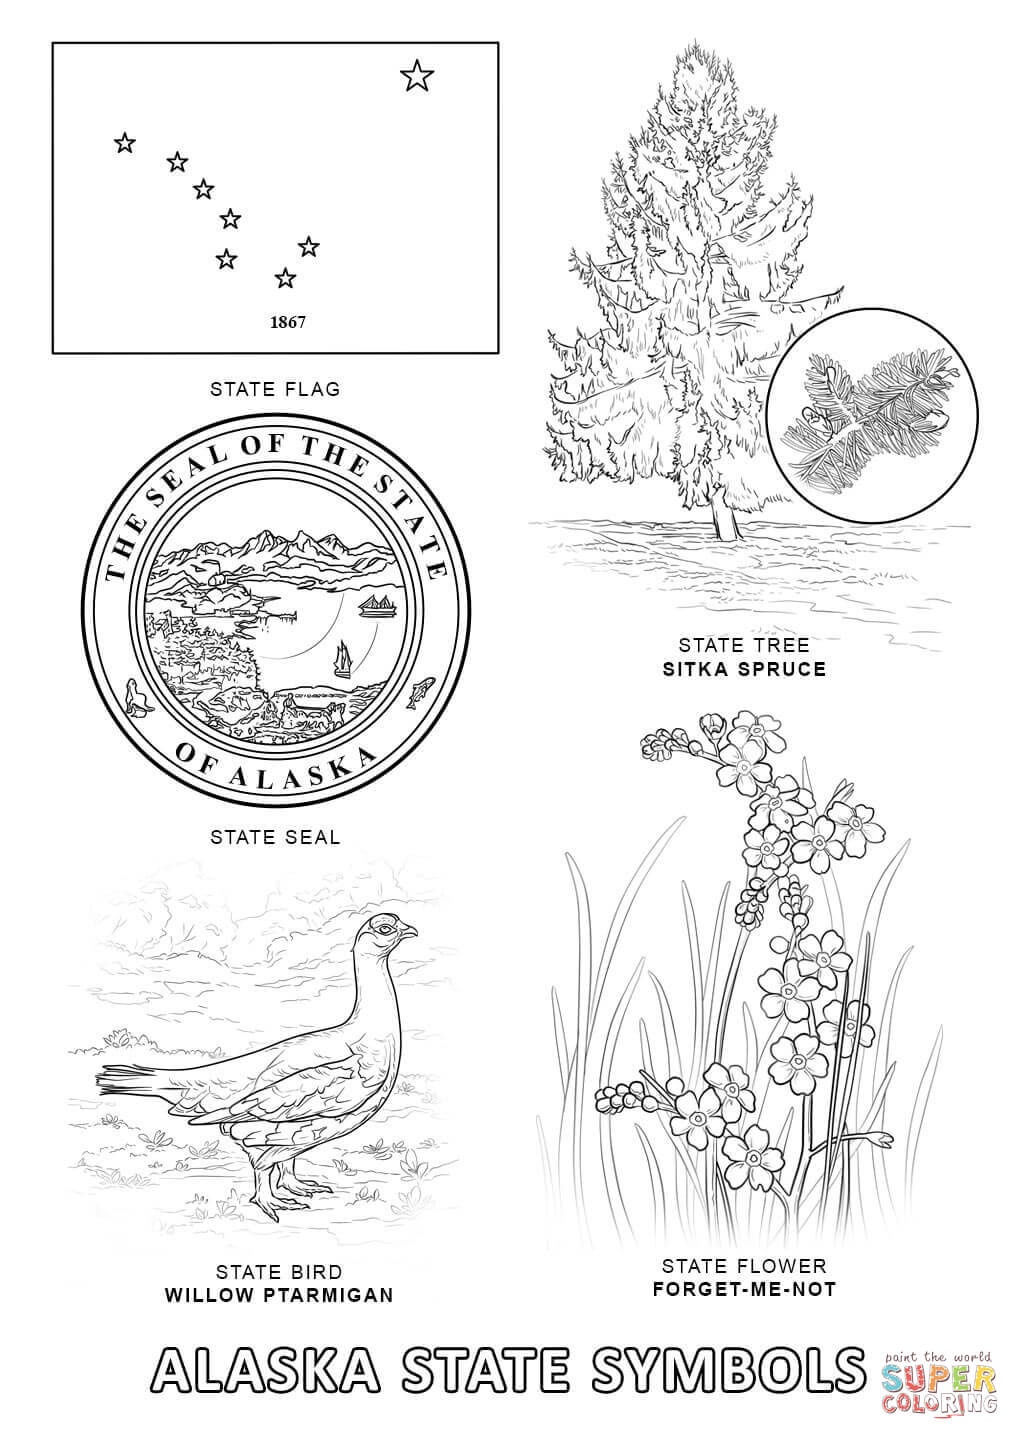 Alaska State Symbols Coloring Page | Free Printable Coloring Pages - Free Printable Pictures Of Alaska